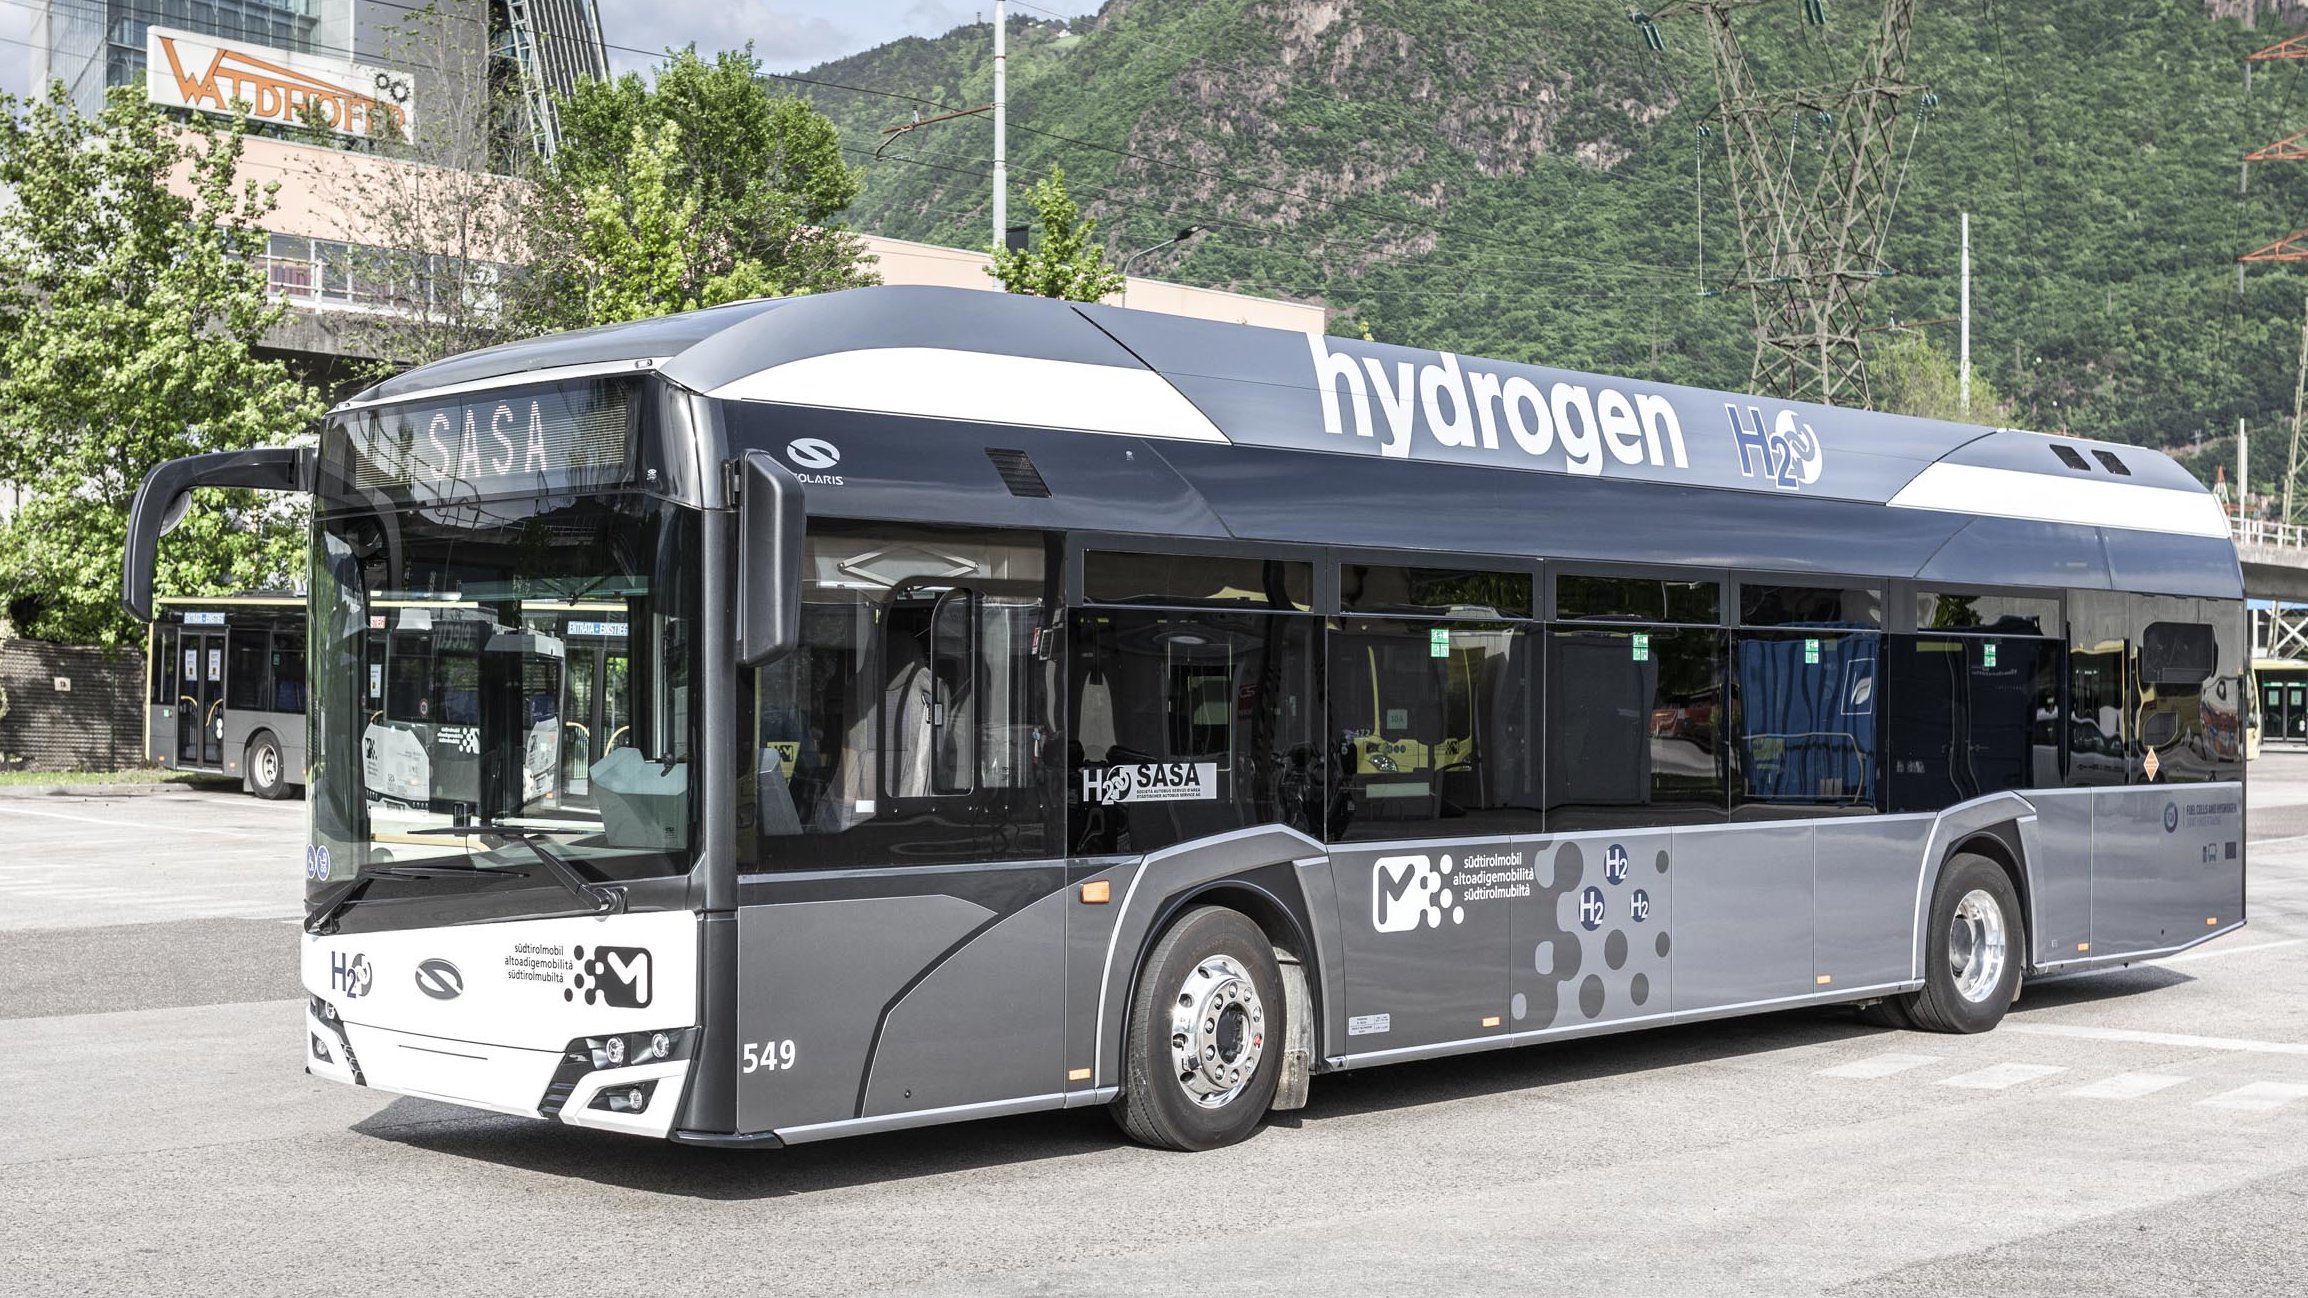 The new hydrogen bus in Bolzano / Bozen